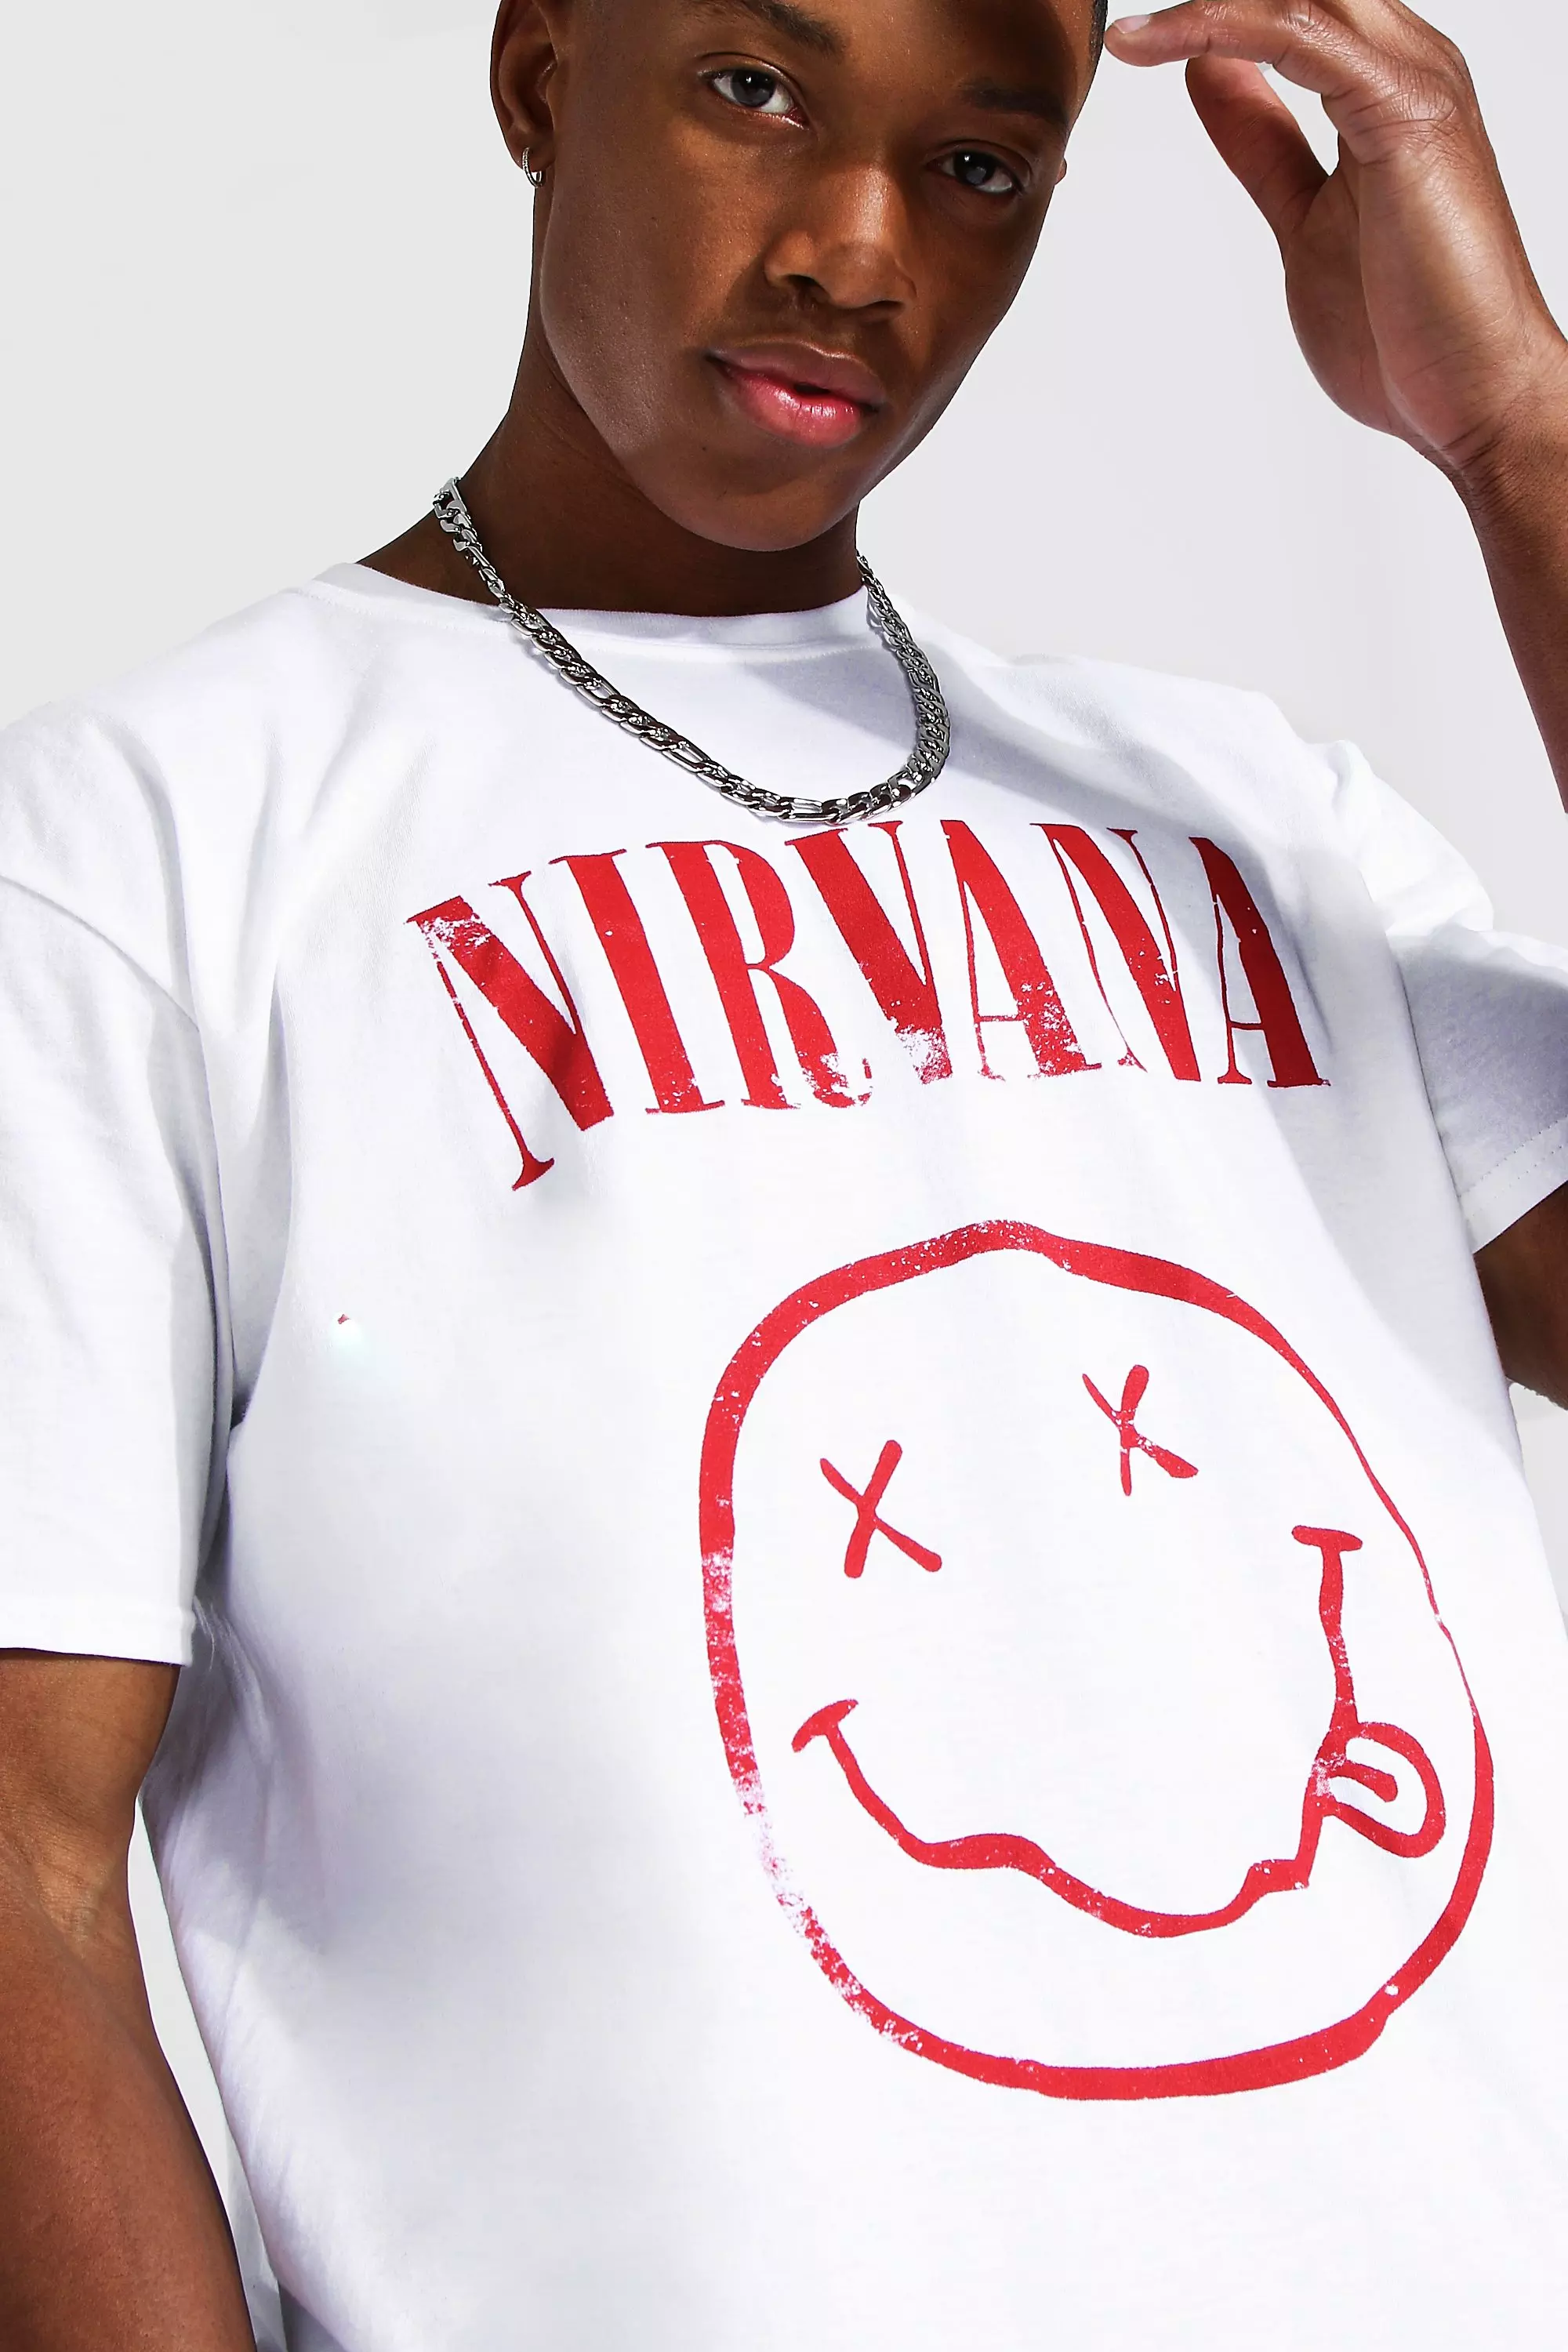 Nirvana Acid Wash License Graphic T-Shirt